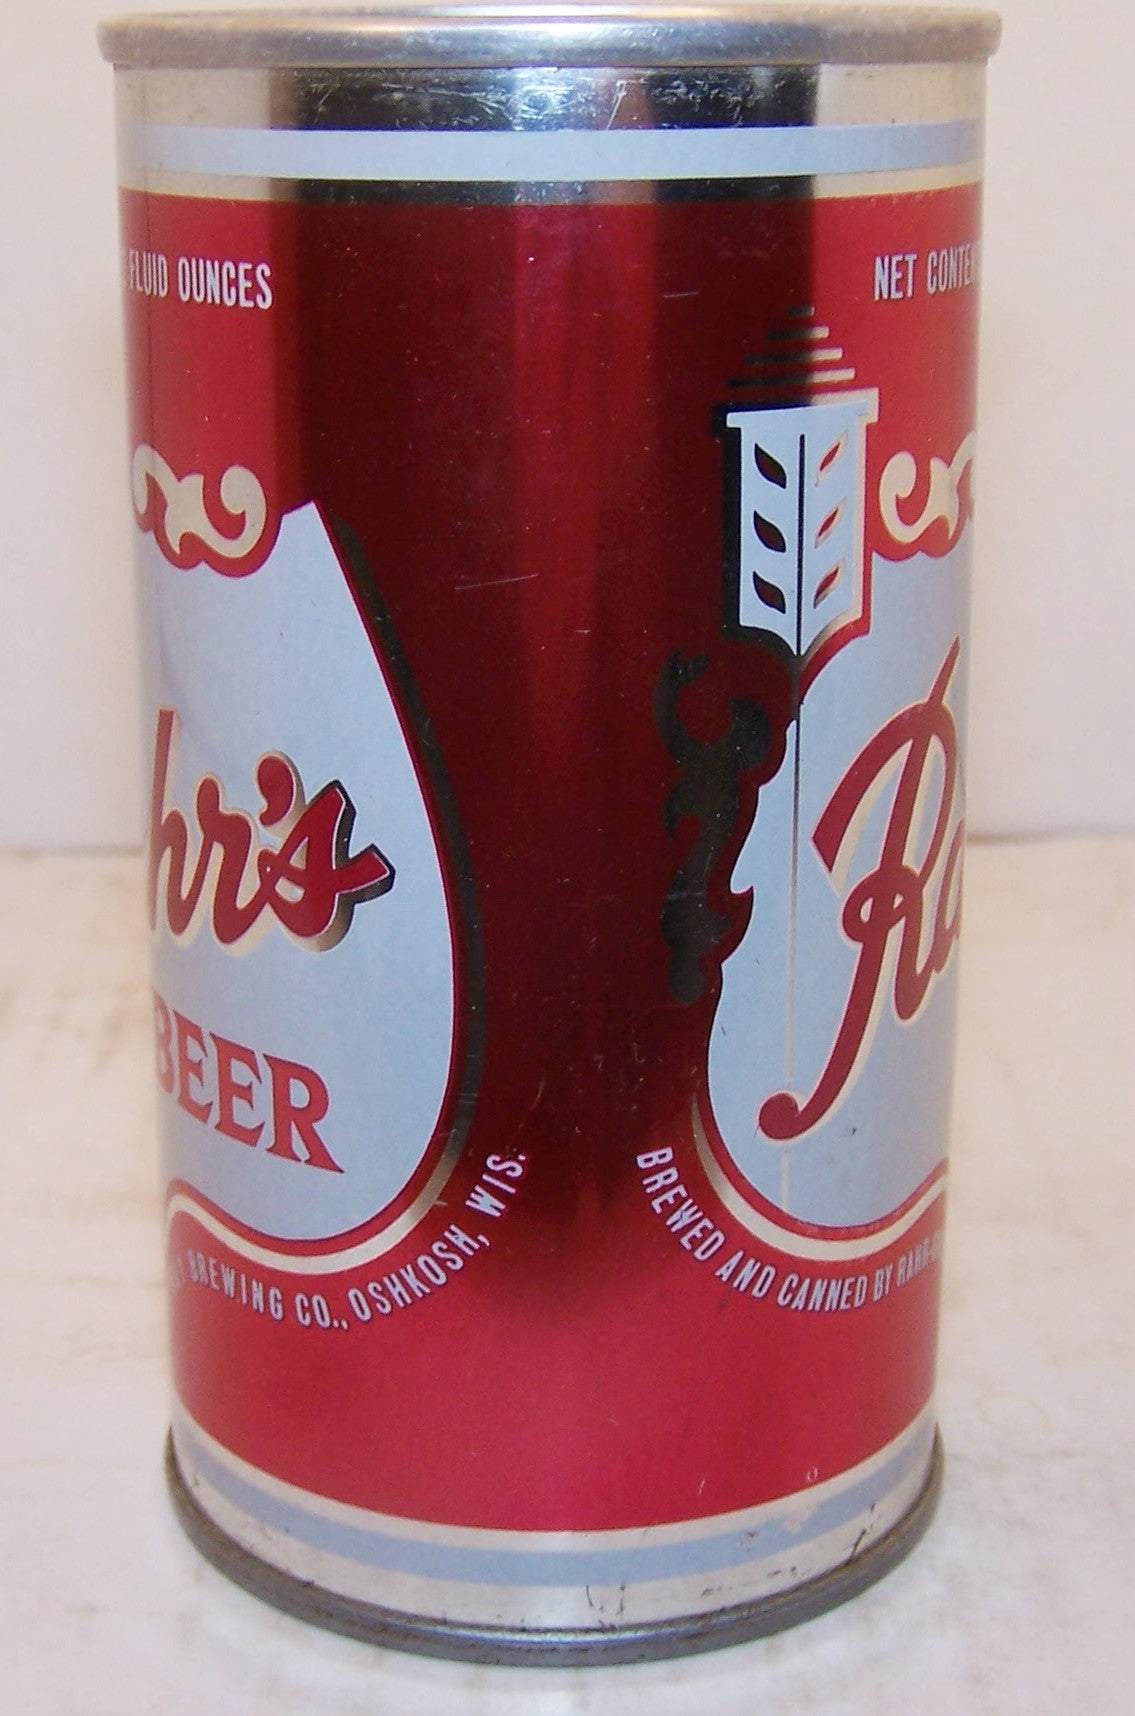 Rahr's Beer, USBC II 111-19 Grade 1/1+ Sold on 2/11/15